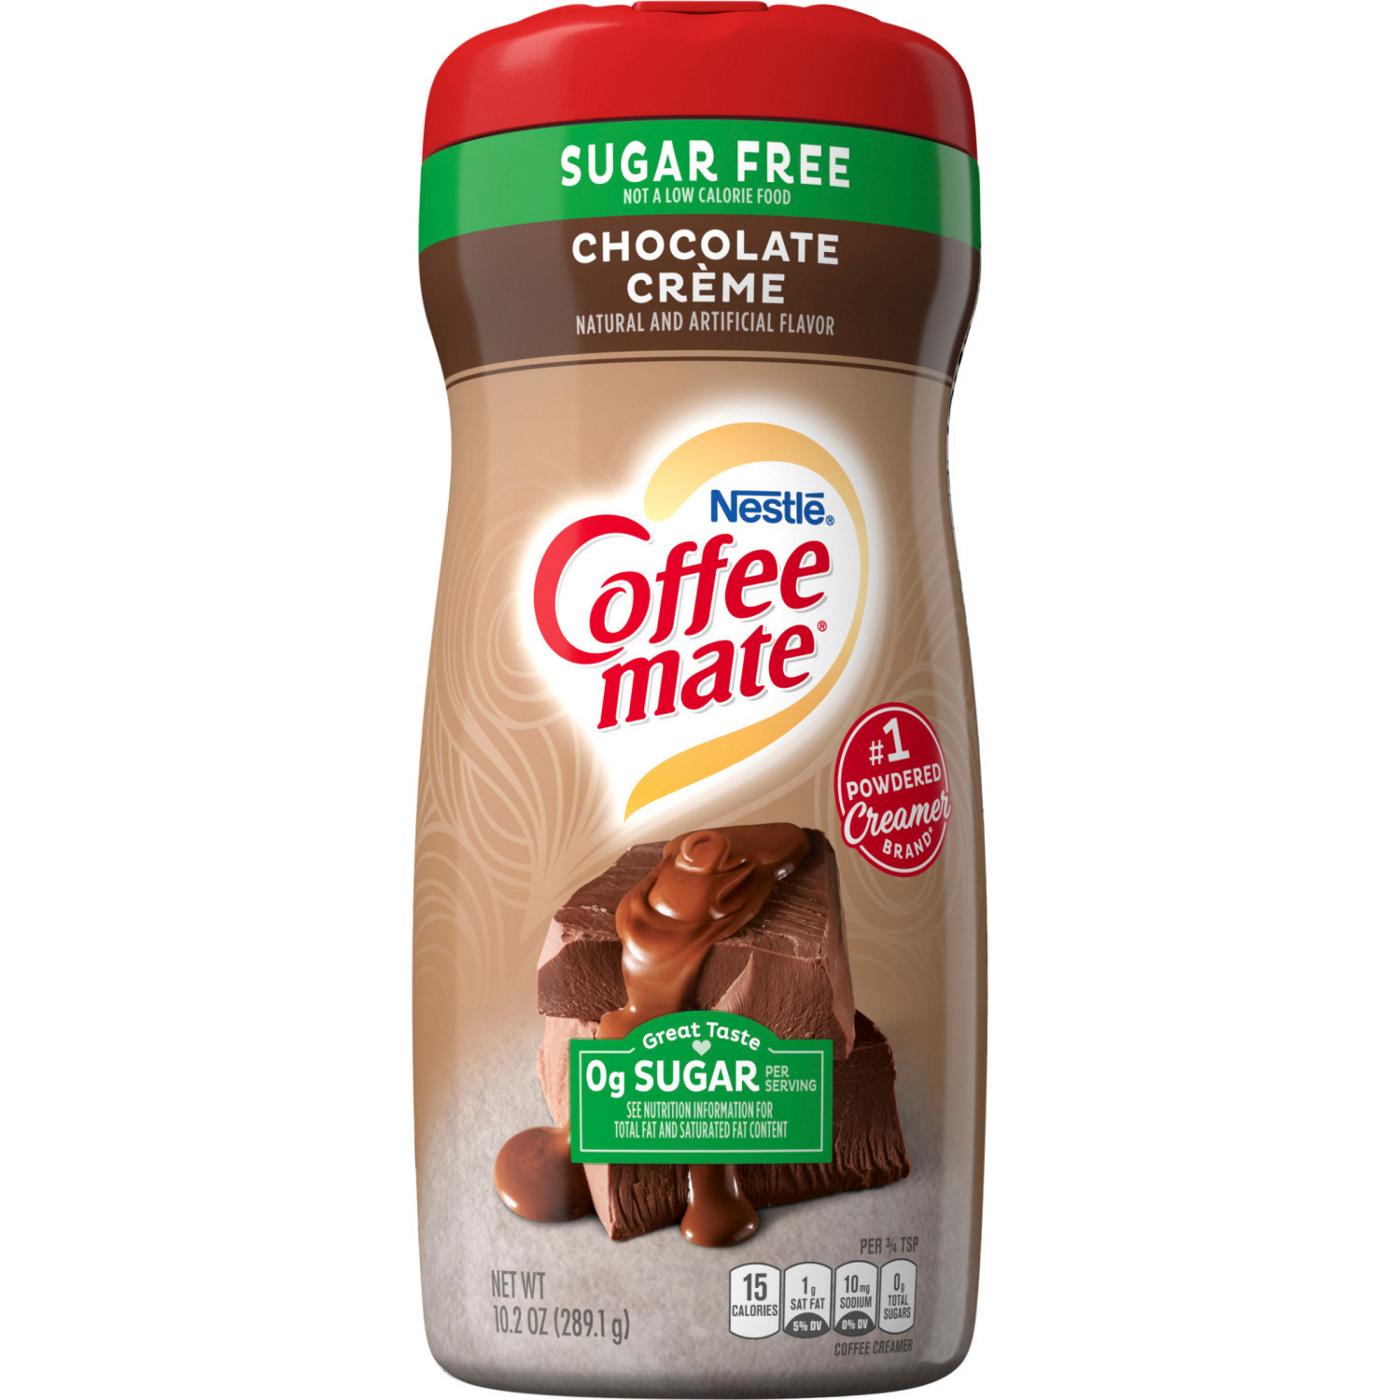 Nestle Coffee Mate Sugar Free Chocolate Creme Powder Coffee Creamer; image 1 of 8